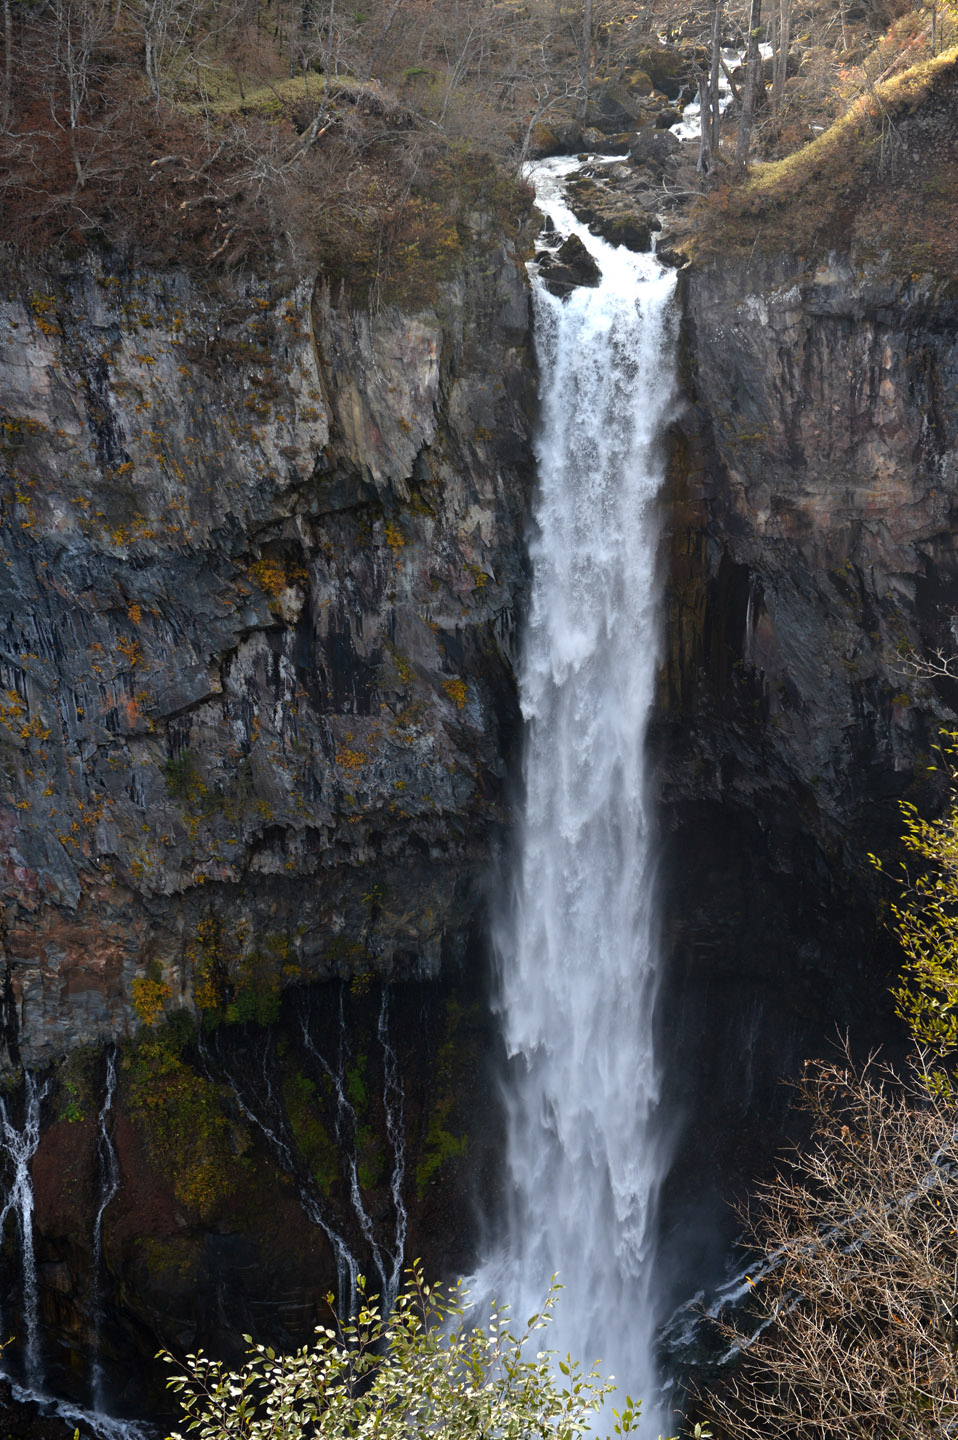 Kegon-Wasserfall